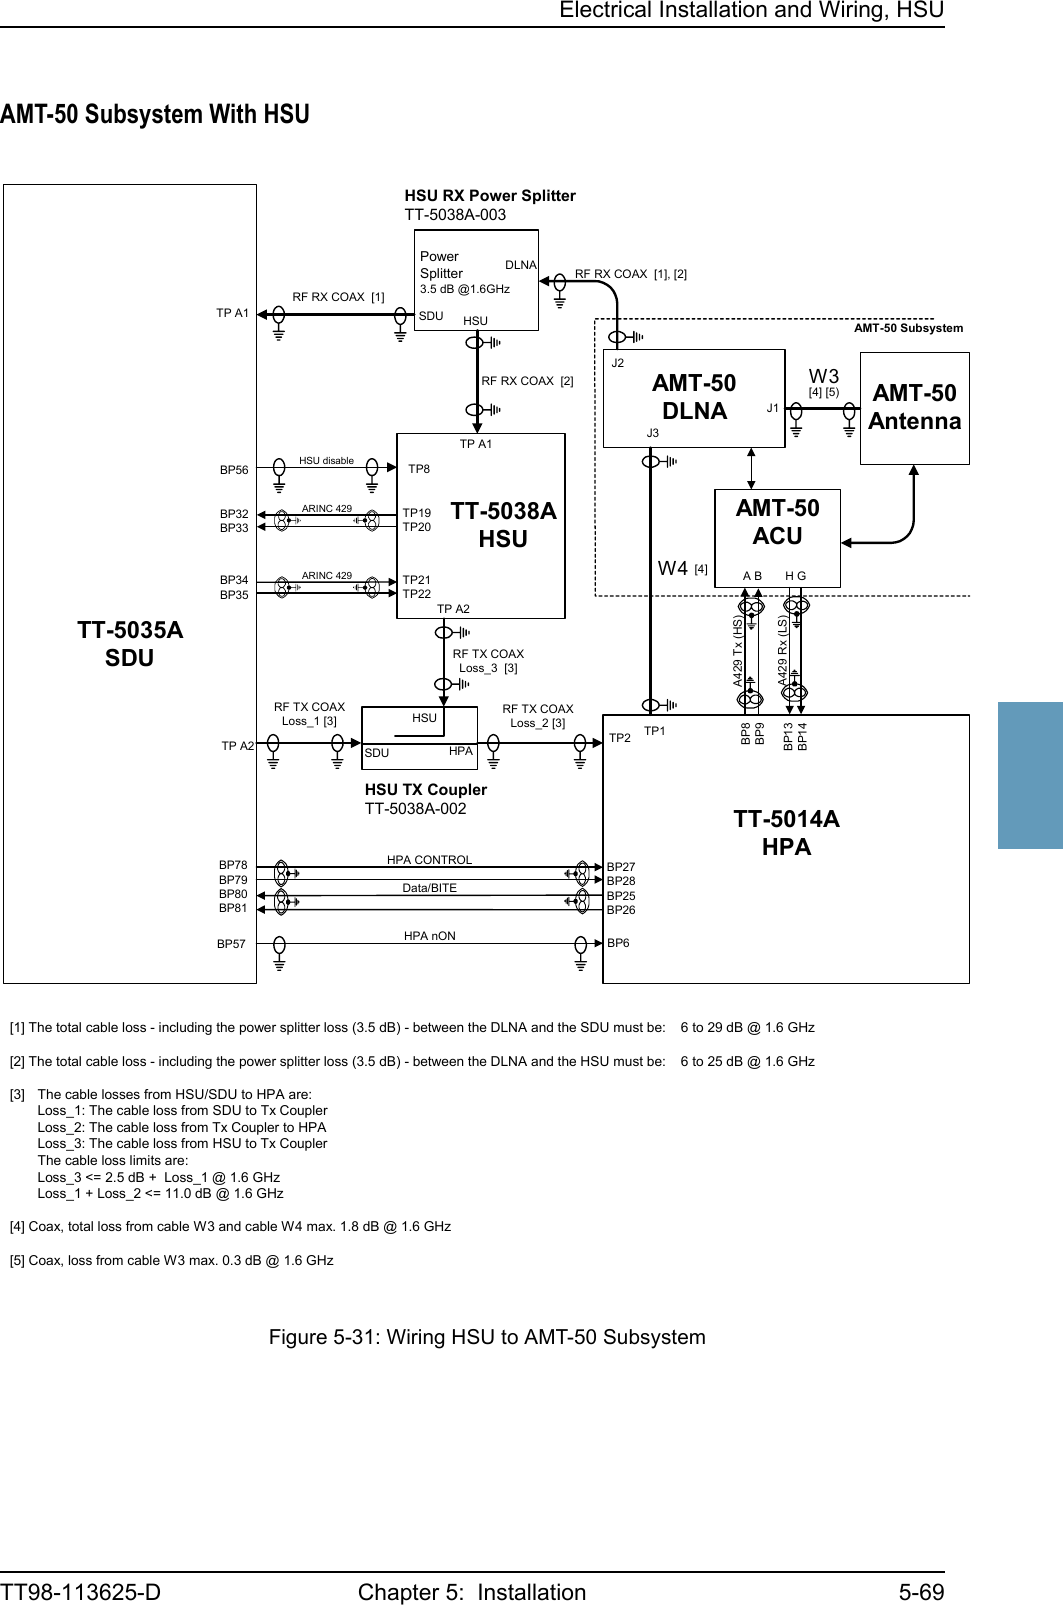 Electrical Installation and Wiring, HSUTT98-113625-D Chapter 5:  Installation 5-695555AMT-50 Subsystem With HSUFigure 5-31: Wiring HSU to AMT-50 SubsystemHSU TX CouplerTT-5038A-002TT-5035ASDUAMT-50AntennaAMT-50DLNAPowerSplitter3.5 dB @1.6GHzHSUSDUDLNAHSU RX Power SplitterTT-5038A-003TT-5038AHSUARINC 429BP56BP32BP33BP34BP35TP8TP19TP20TP21TP22ARINC 429HSU disableTP A1TP A2SDU HPAHSUTP2TT-5014AHPATP1BP78BP79BP80BP81HPA nONBP57 BP6BP27BP28BP25BP26HPA CONTROLData/BITETP A1TP A2RF RX COAX  [1], [2]RF RX COAX  [2]W4[4]RF TX COAXLoss_3  [3]RF TX COAXLoss_1 [3]RF TX COAXLoss_2 [3]RF RX COAX  [1][1] The total cable loss - including the power splitter loss (3.5 dB) - between the DLNA and the SDU must be: 6 to 29 dB @ 1.6 GHz[2] The total cable loss - including the power splitter loss (3.5 dB) - between the DLNA and the HSU must be: 6 to 25 dB @ 1.6 GHz[3] The cable losses from HSU/SDU to HPA are:Loss_1: The cable loss from SDU to Tx CouplerLoss_2: The cable loss from Tx Coupler to HPALoss_3: The cable loss from HSU to Tx CouplerThe cable loss limits are:Loss_3 &lt;= 2.5 dB +  Loss_1 @ 1.6 GHzLoss_1 + Loss_2 &lt;= 11.0 dB @ 1.6 GHz[4] Coax, total loss from cable W3 and cable W4 max. 1.8 dB @ 1.6 GHz[5] Coax, loss from cable W3 max. 0.3 dB @ 1.6 GHzAMT-50ACUA B       H GW3[4] [5)BP8BP9BP13BP14A429 Tx (HS)A429 Rx (LS)J3J1J2AMT-50 Subsystem